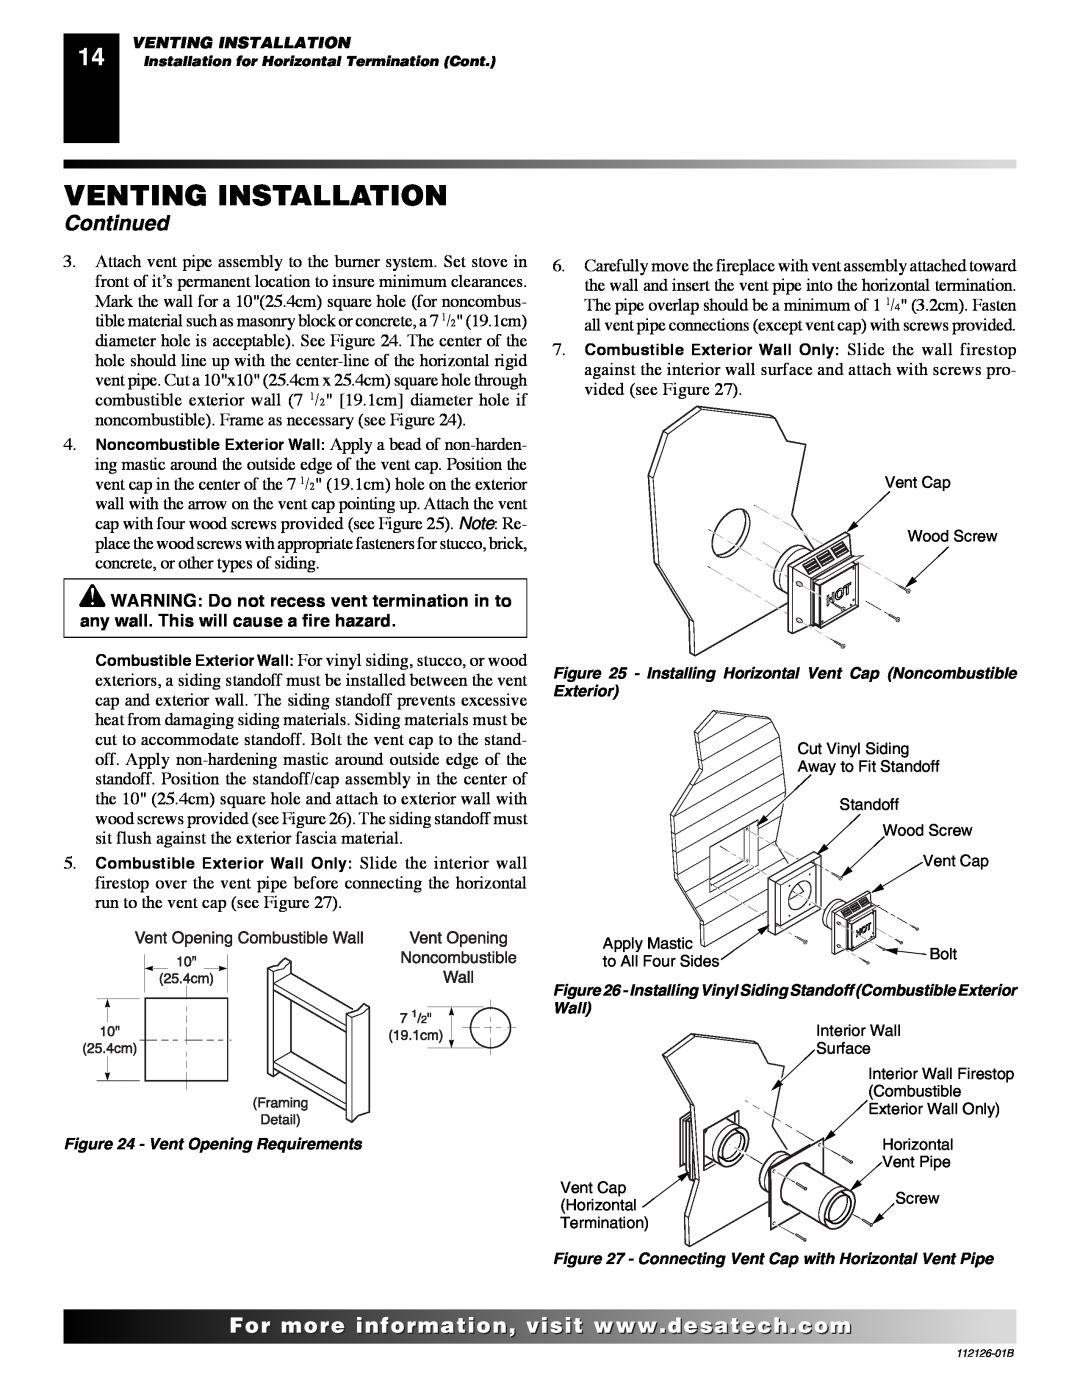 Desa SDVBND, SDVBPD installation manual Venting Installation, Continued, Vent Opening Requirements 